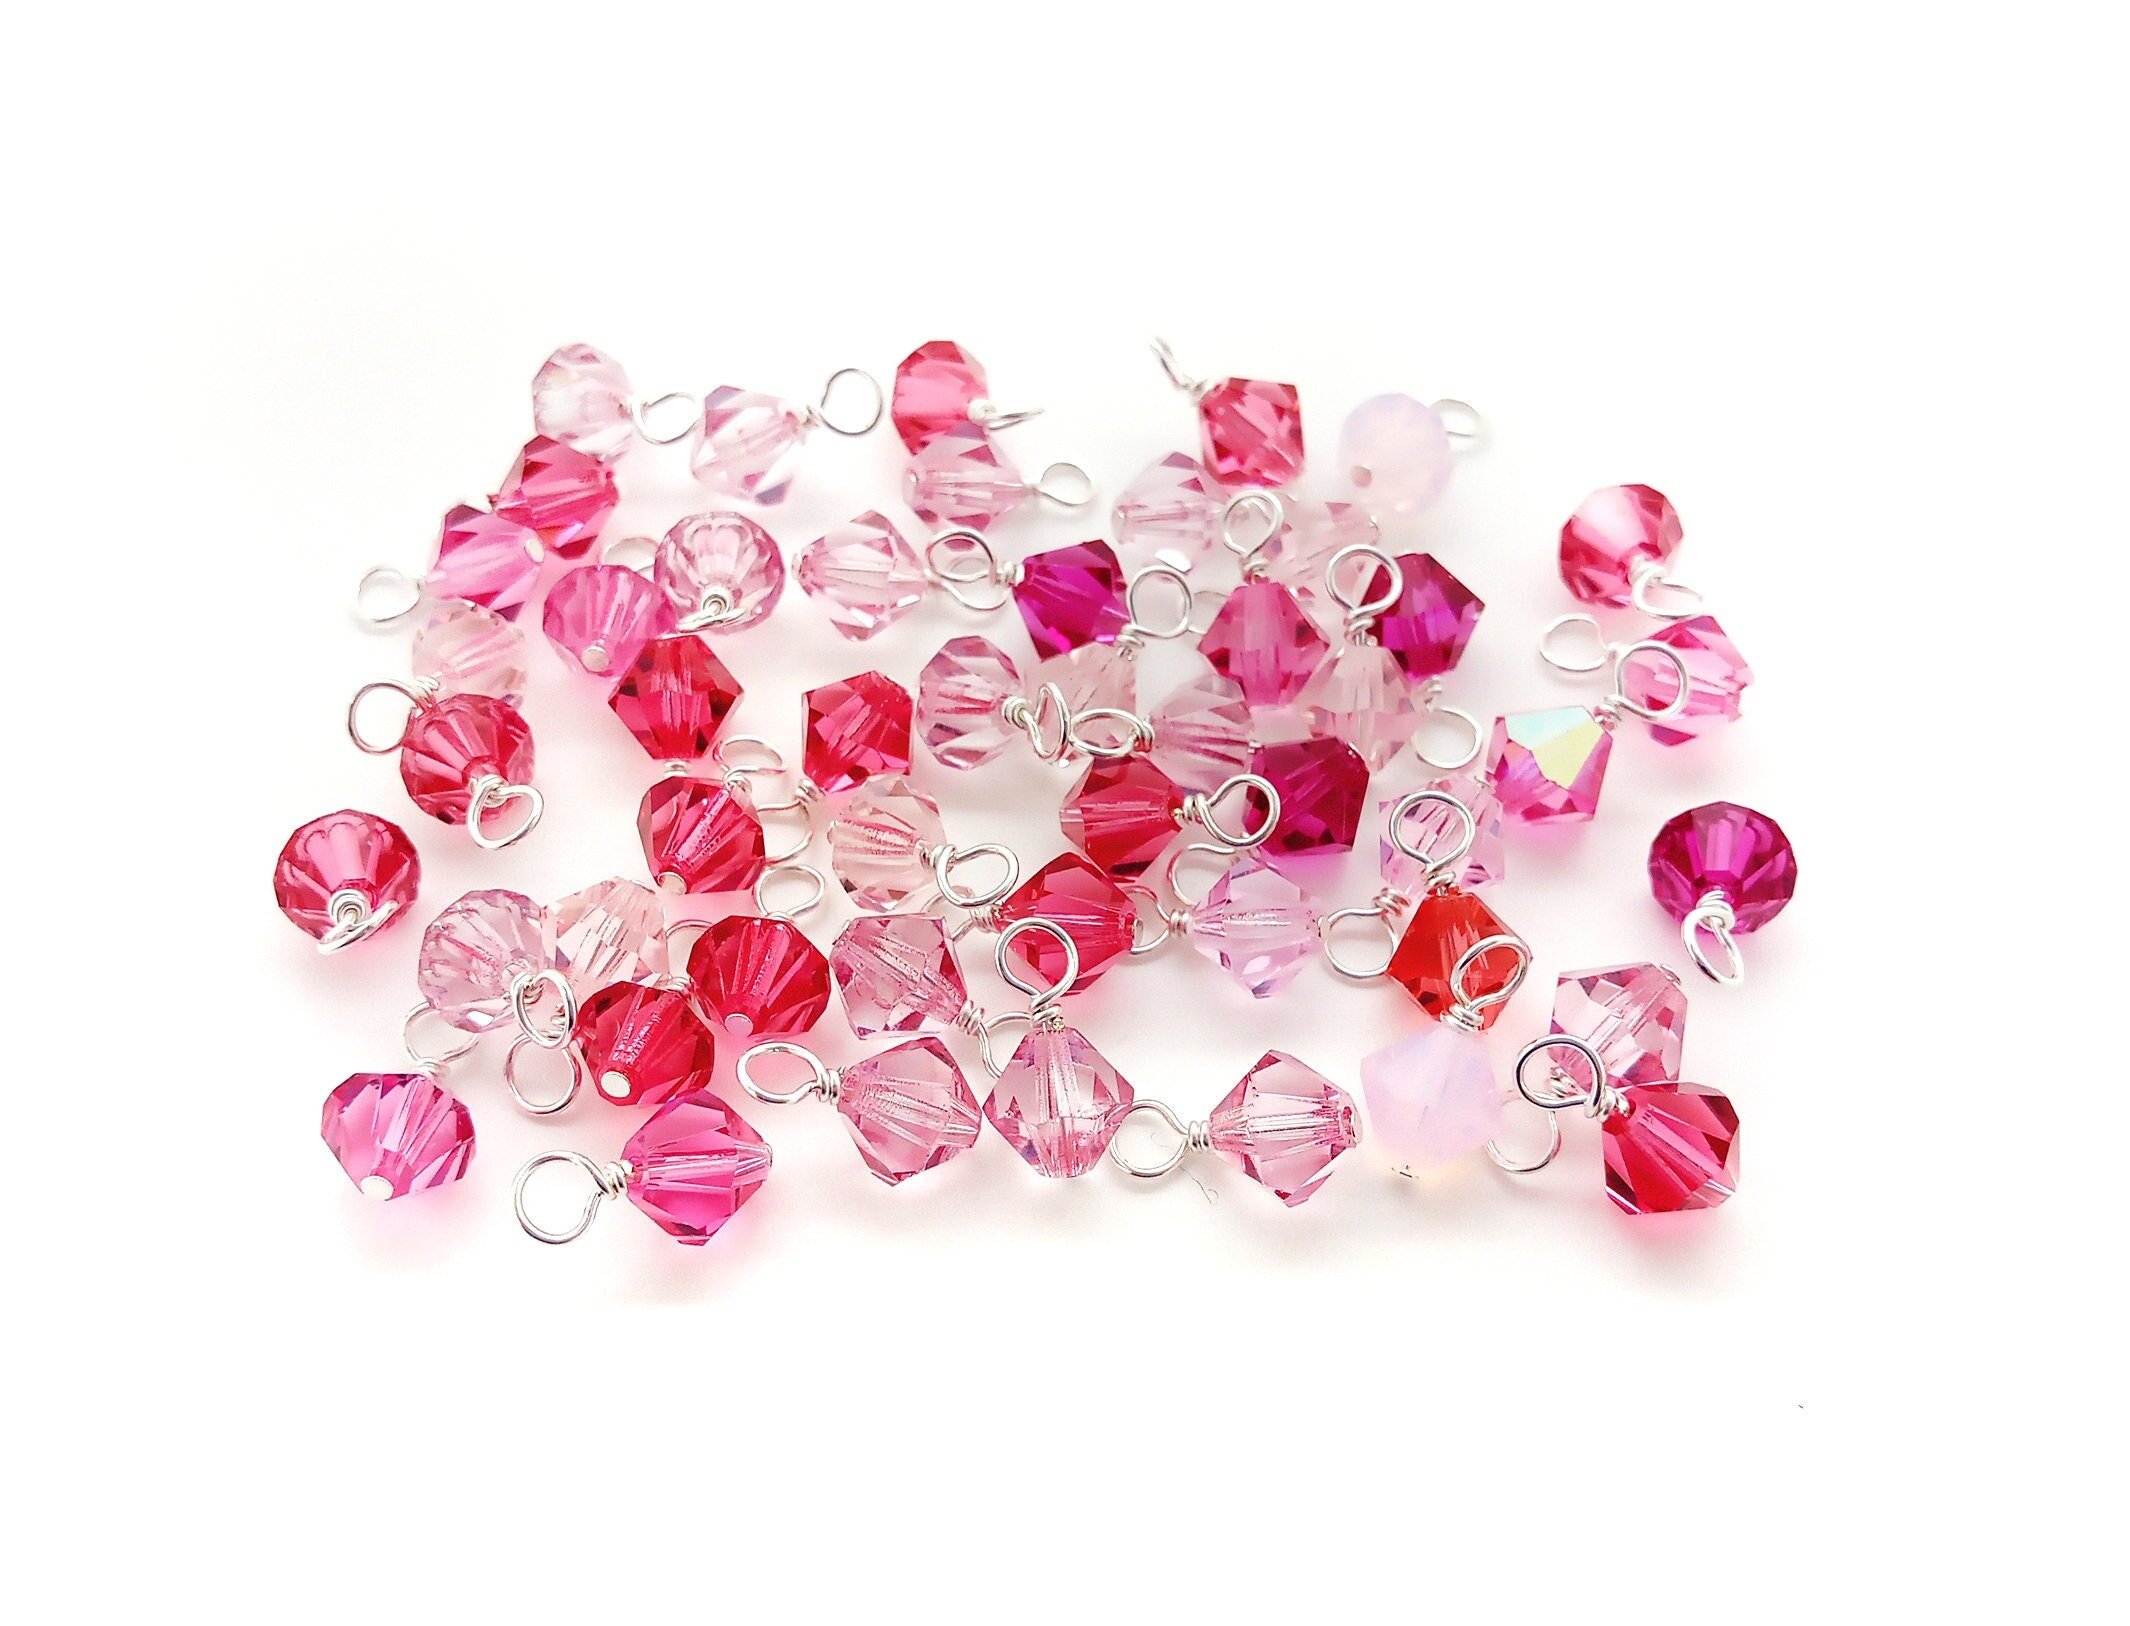 Bulk Acrylic Charms 100 Pc Mixed Plastic Charms and Pendants Colorful  Kawaii Jewelry Supply Rave Kandi Charms 